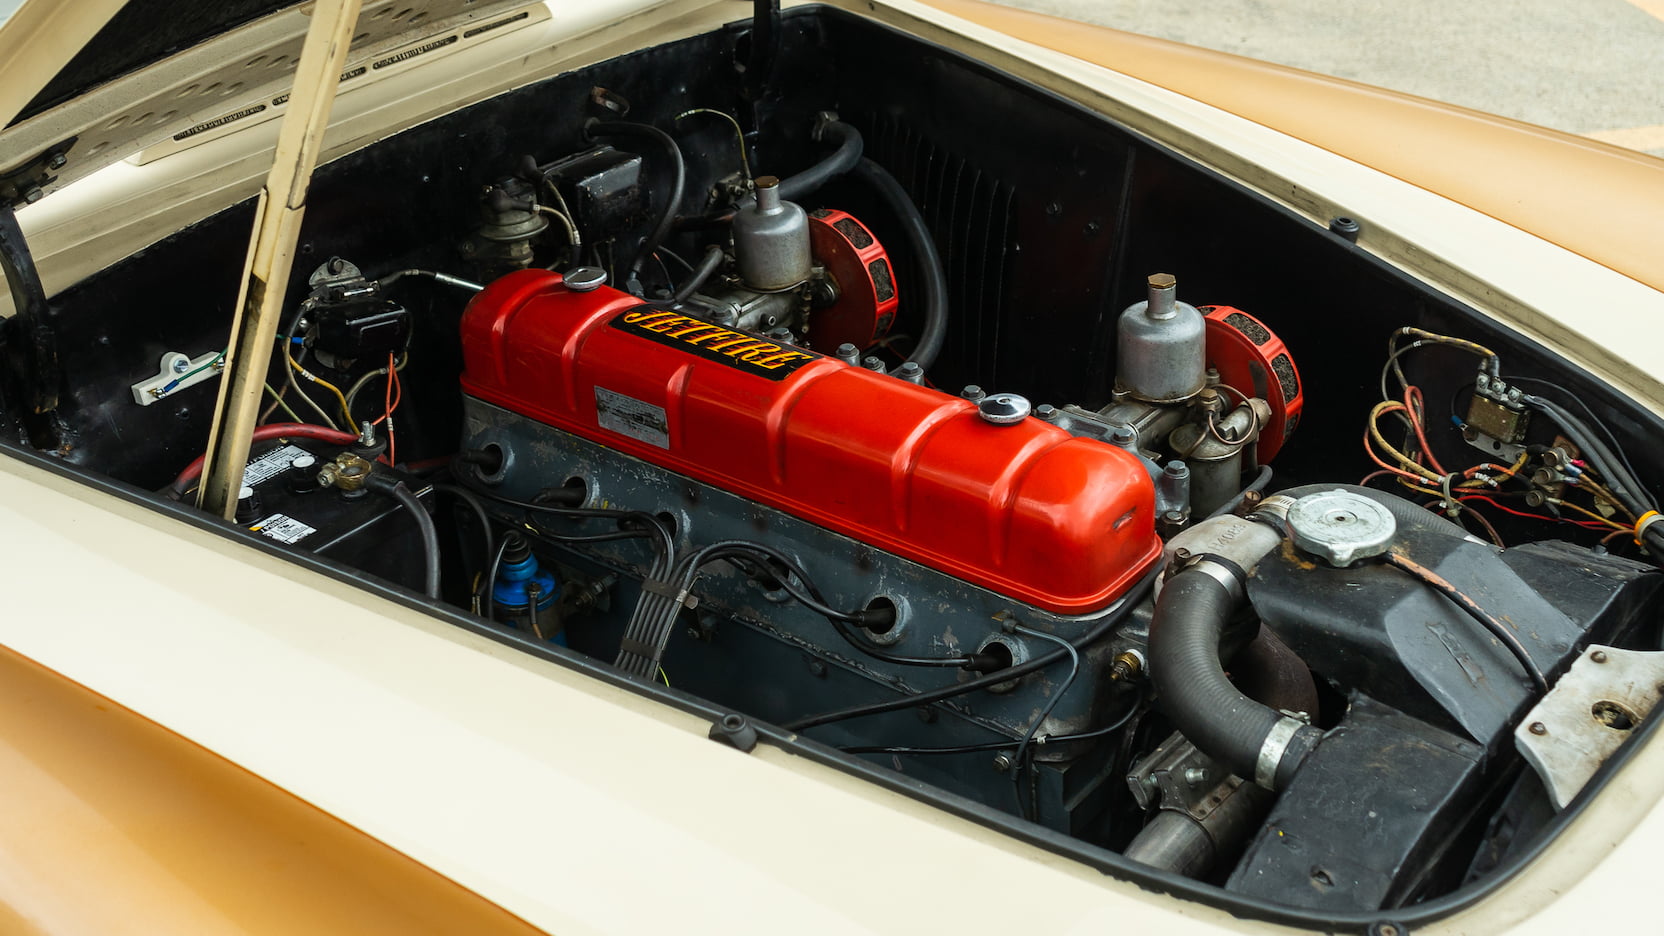 Nash-Healey Le Mans Jetfire engine